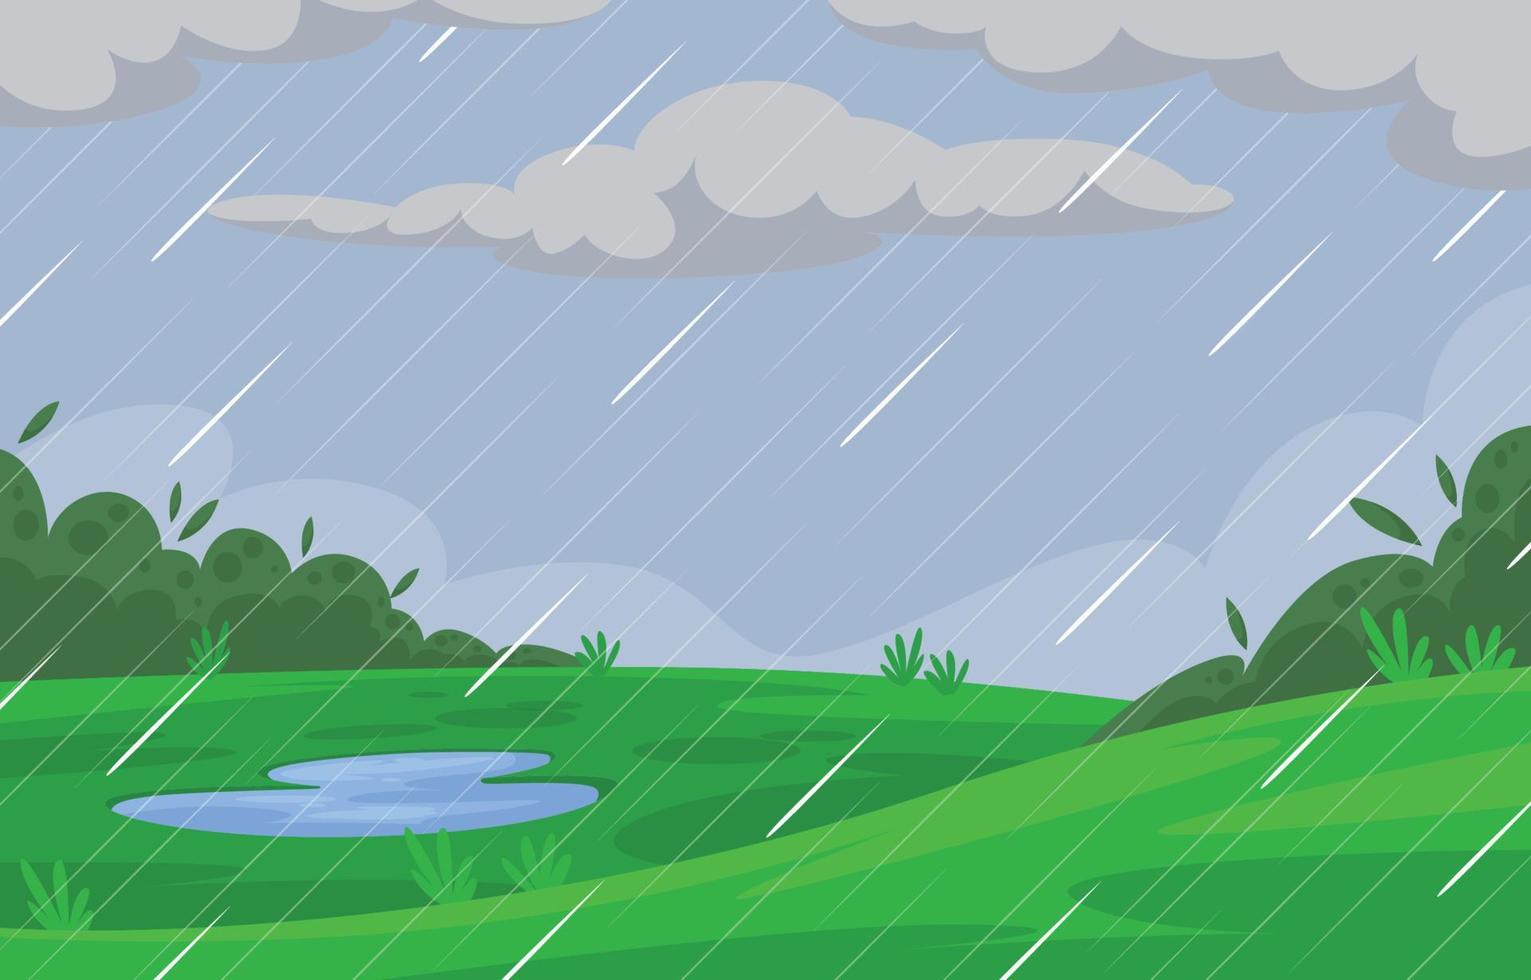 Raining In The Garden Background Design vector